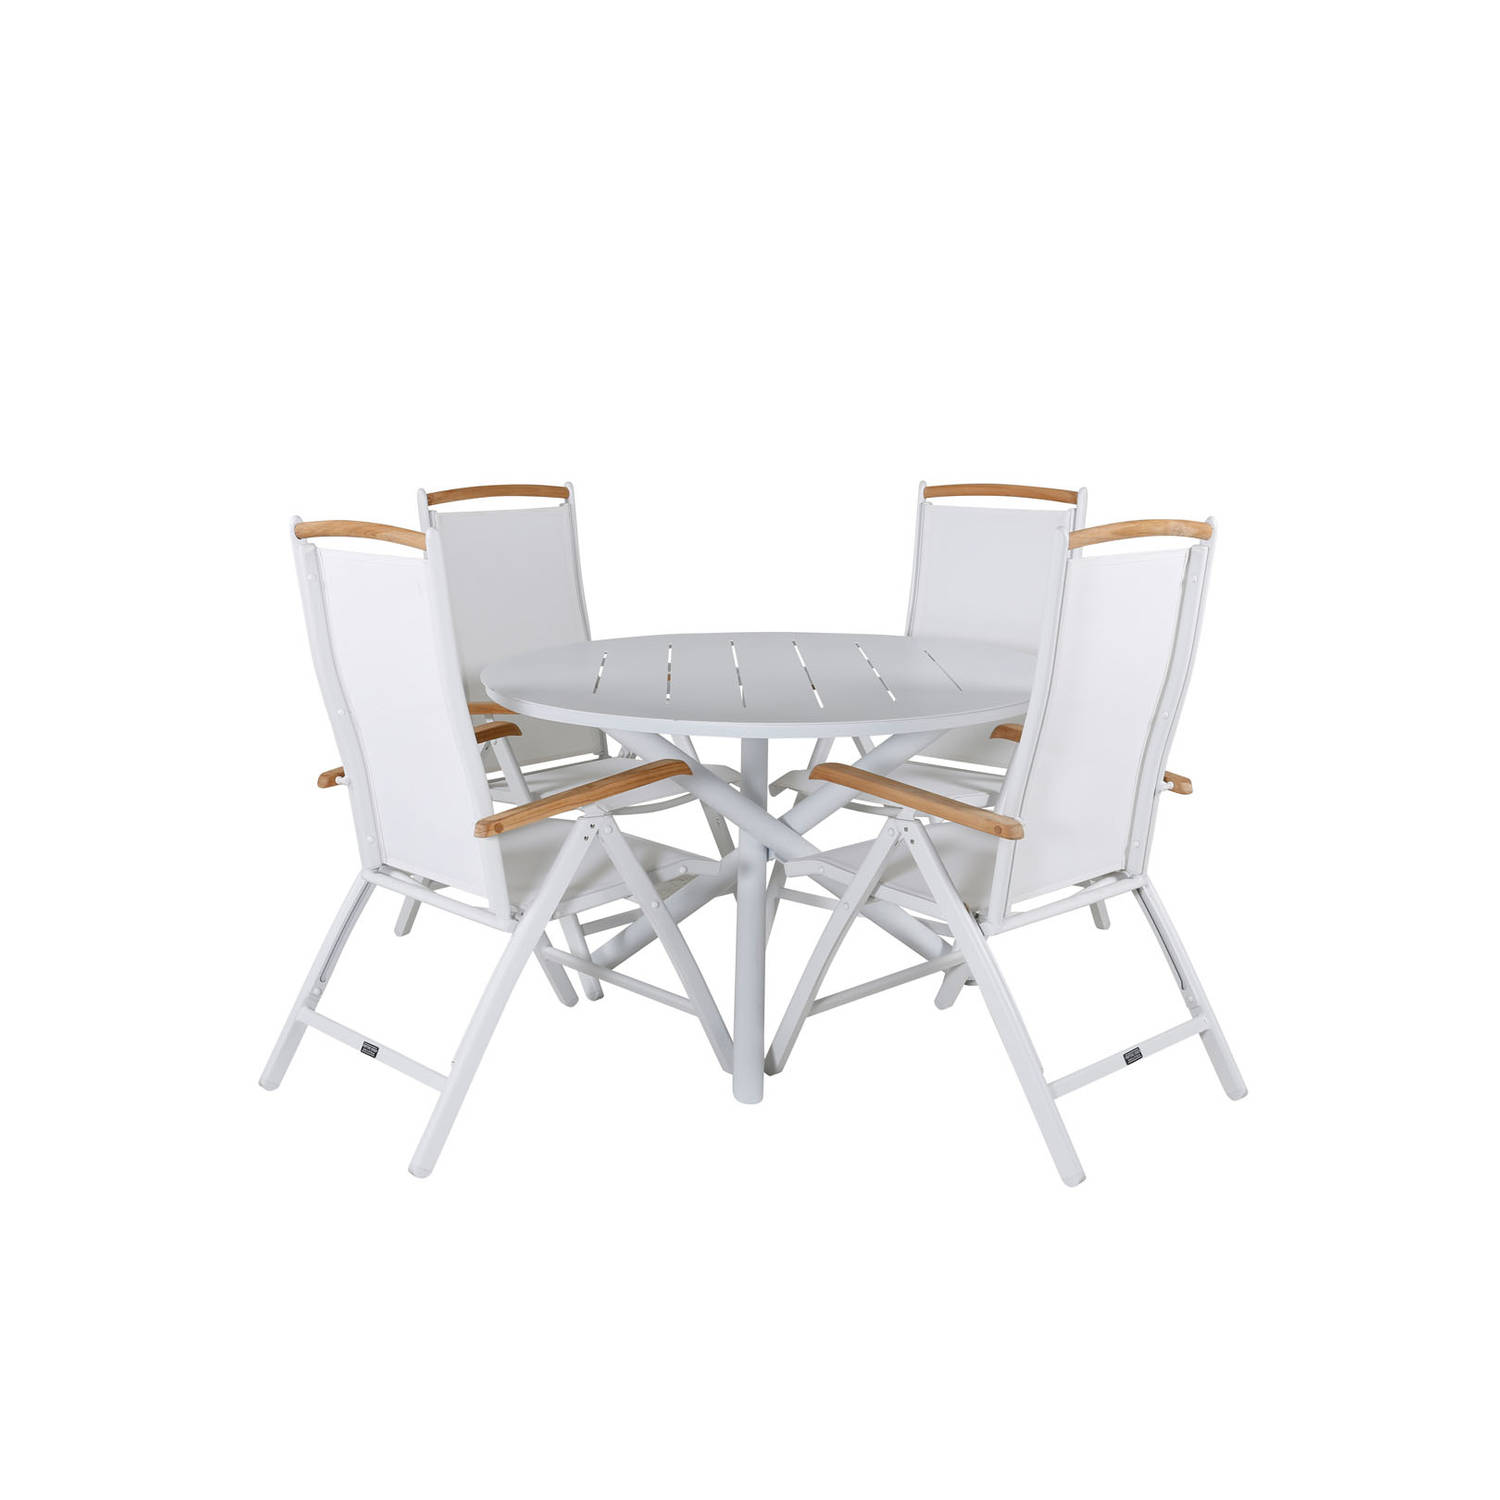 Alma tuinmeubelset tafel Ø120cm en 4 stoel Panama naturel, wit.